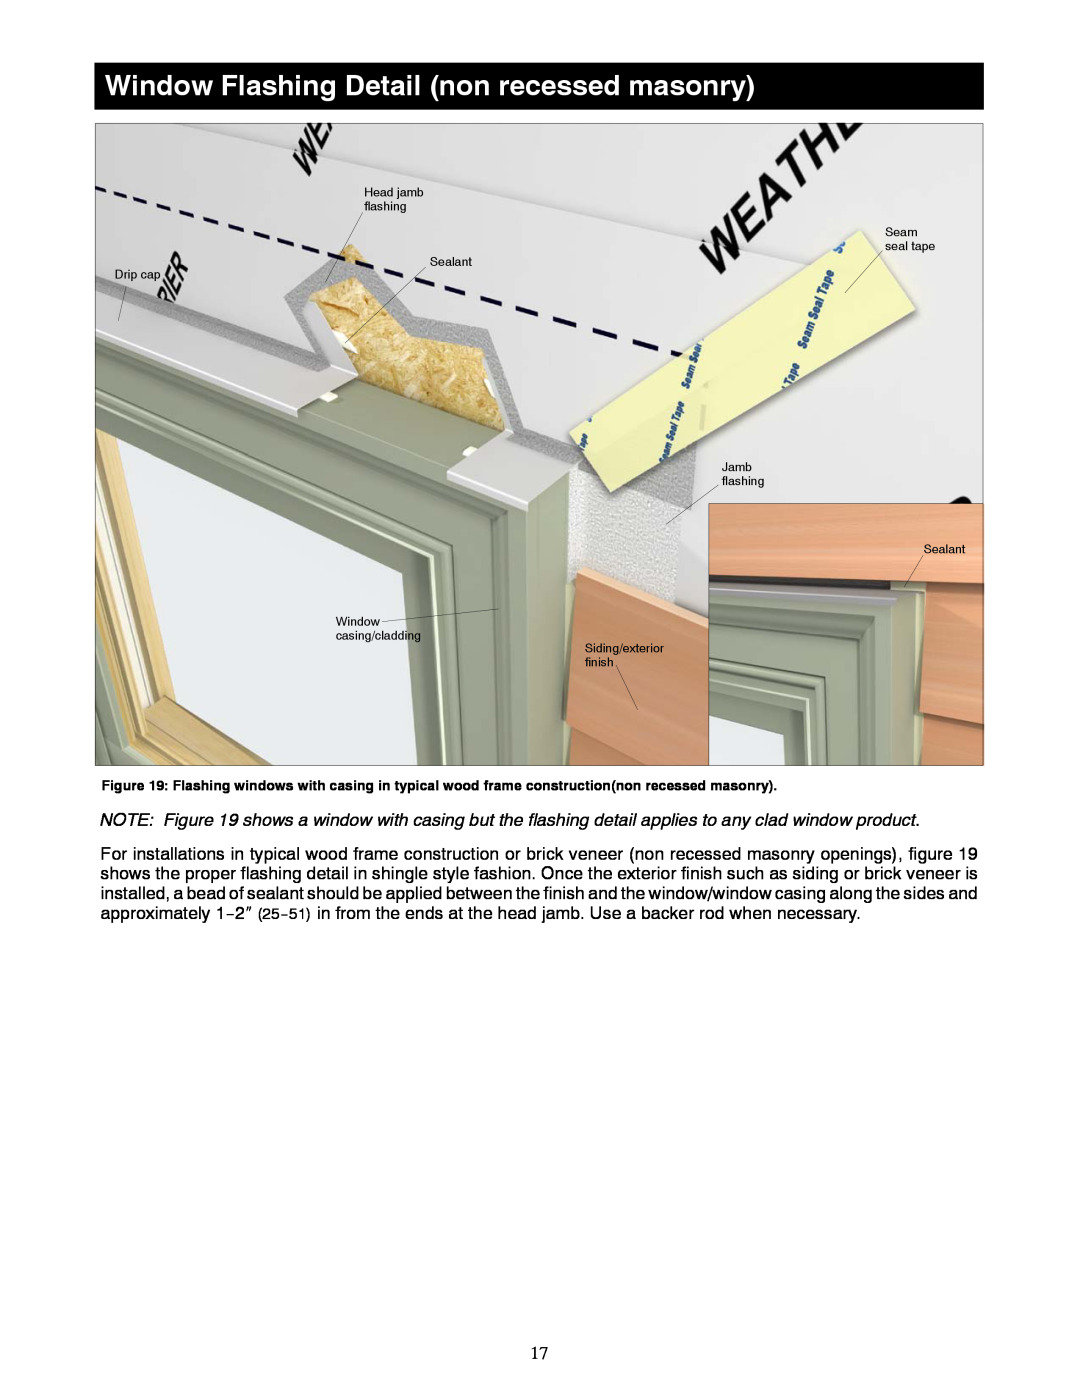 Marvin manual Window Flashing Detail non recessed masonry, Head jamb flashing Sealant Drip cap Window casing/cladding 